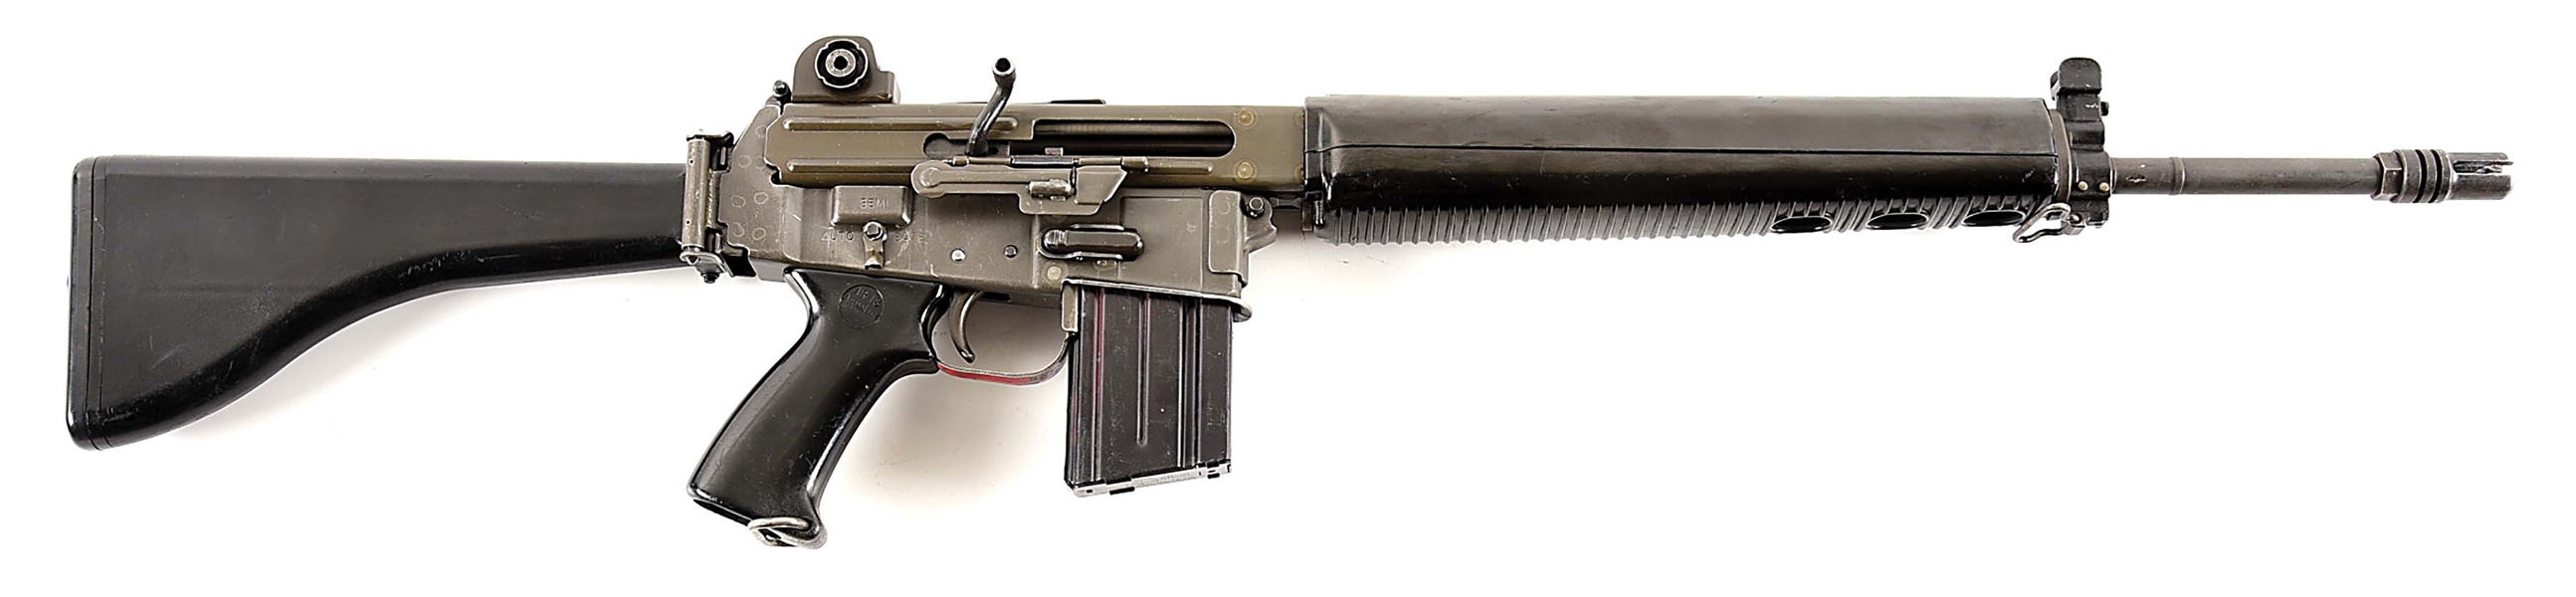 (N) DESIRABLE COSTA MESA ARMALITE AR-18 MACHINE GUN (CURIO AND RELIC).